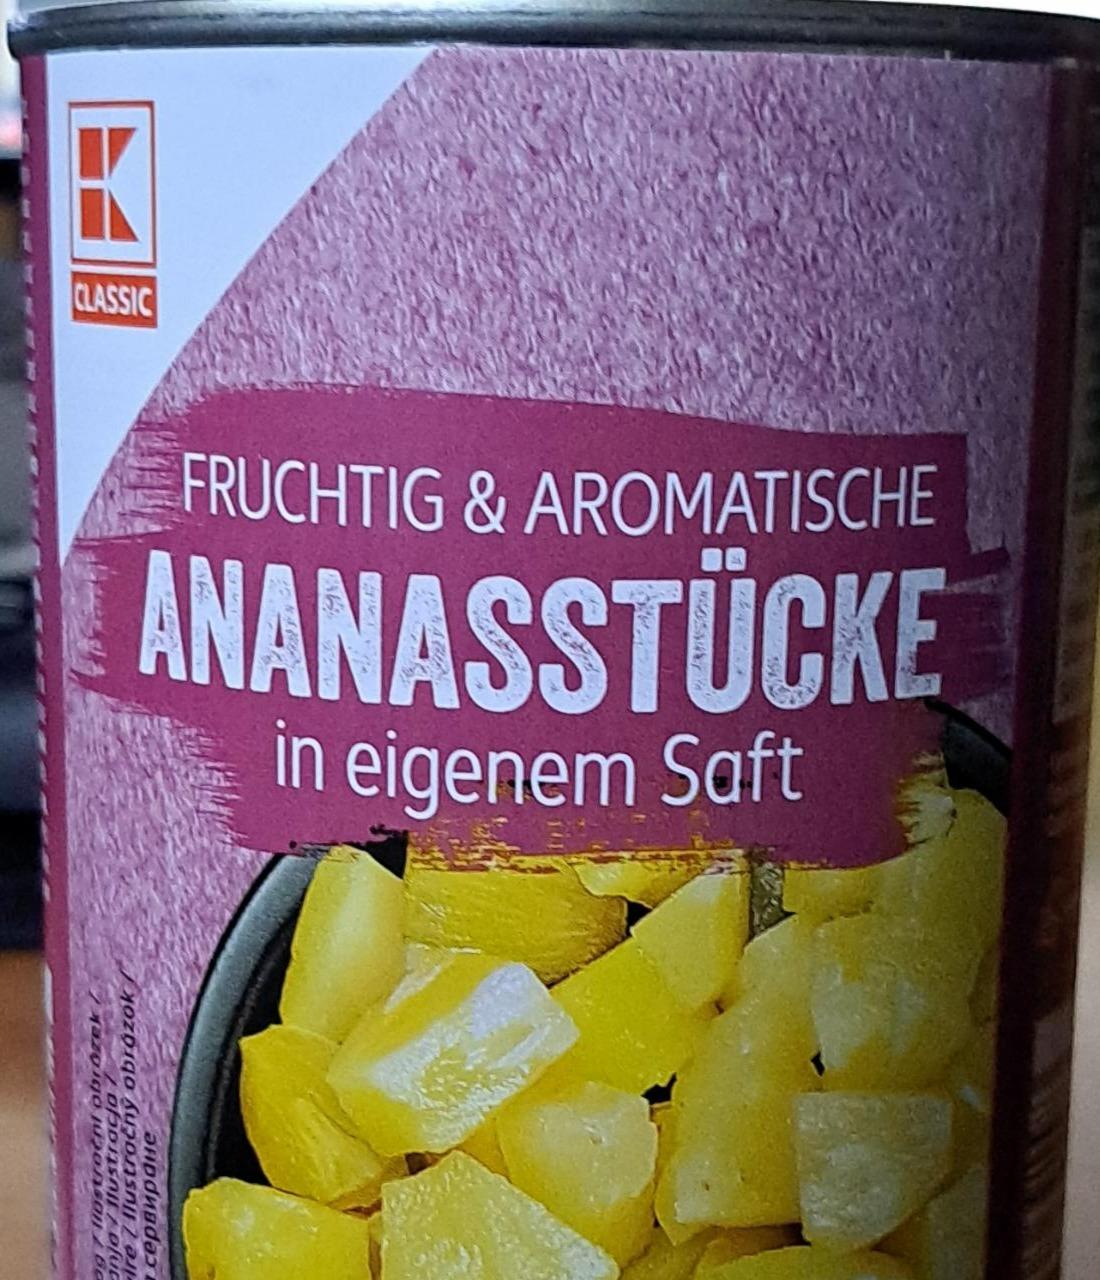 Fotografie - Fruchtig & Aromatische Ananasstücke in eigenem Saft K-Classic